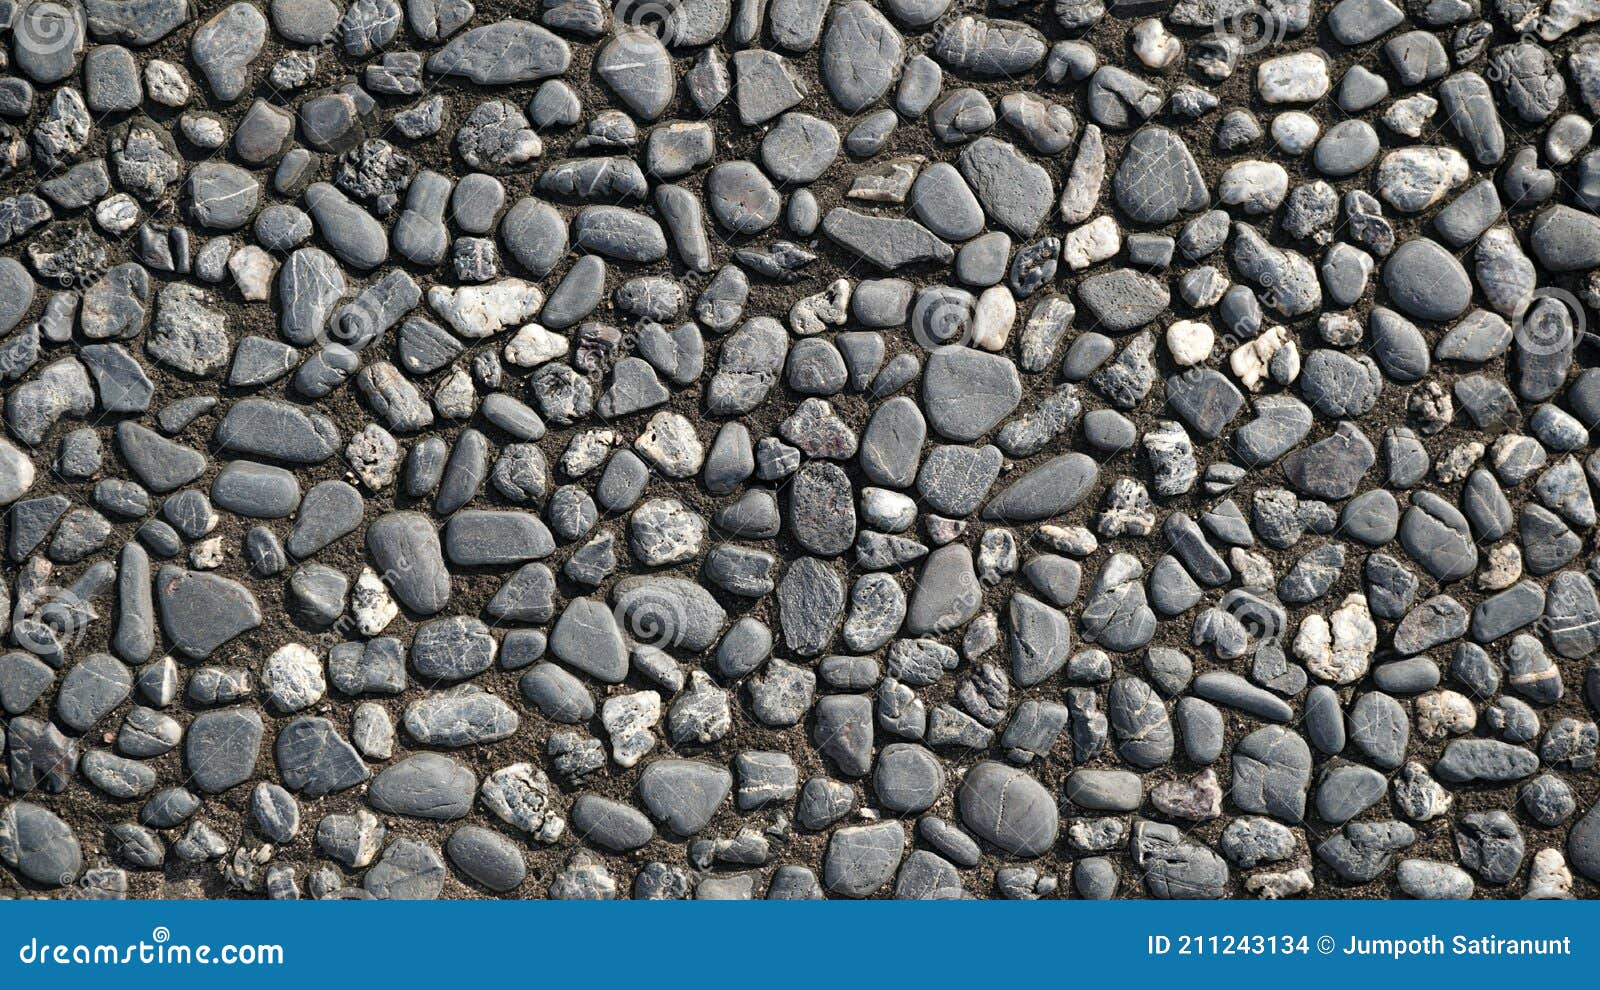 https://thumbs.dreamstime.com/z/pattern-paving-pebble-stone-concrete-floor-surface-rough-gravel-sidewalk-texture-wallpaper-background-pattern-paving-211243134.jpg